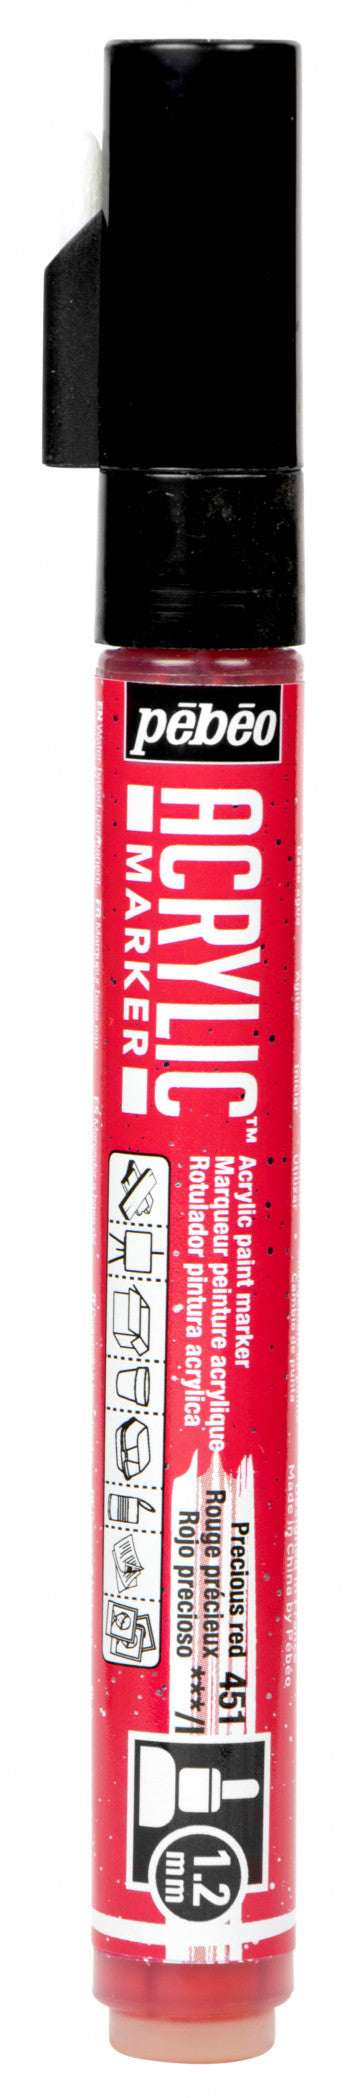 Acrylic Marker 1.2mm Pebeo Precious red - 451